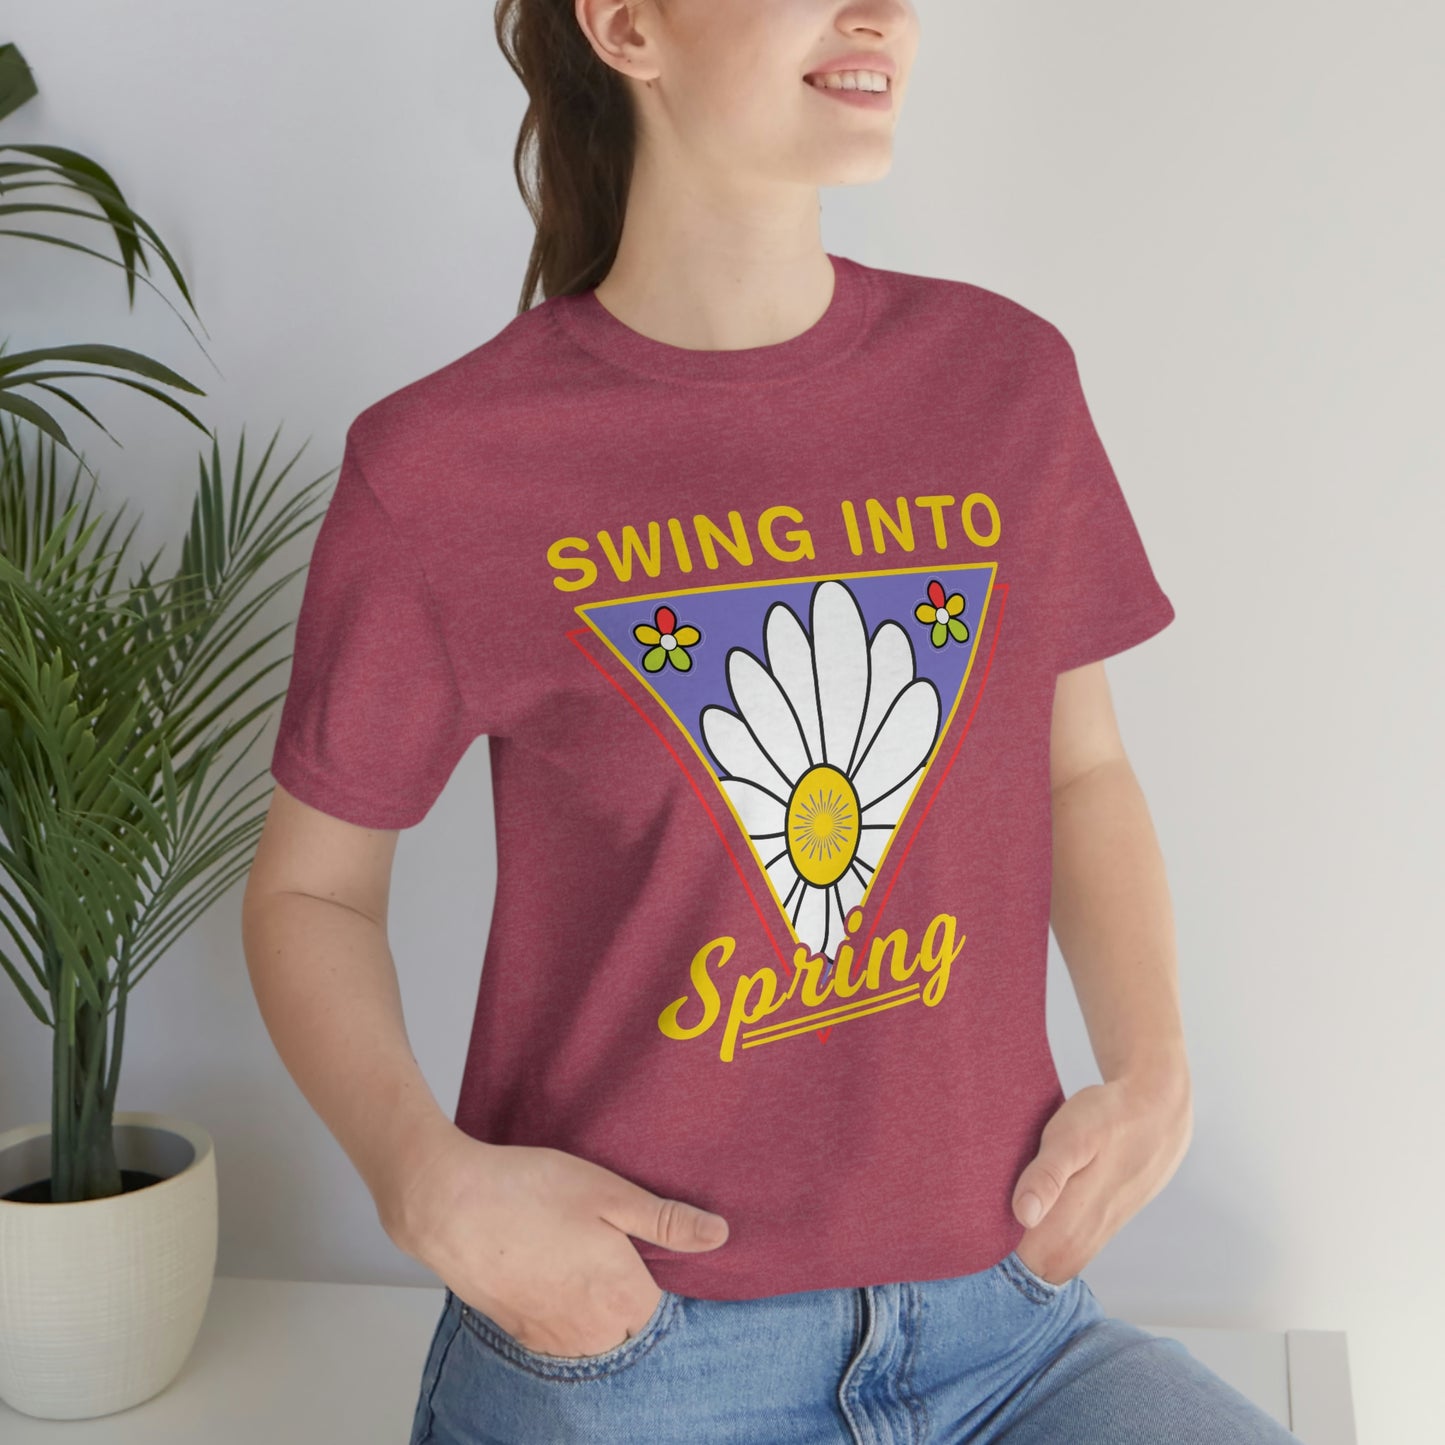 Swing Into Spring Unisex Jersey Short Sleeve Tee